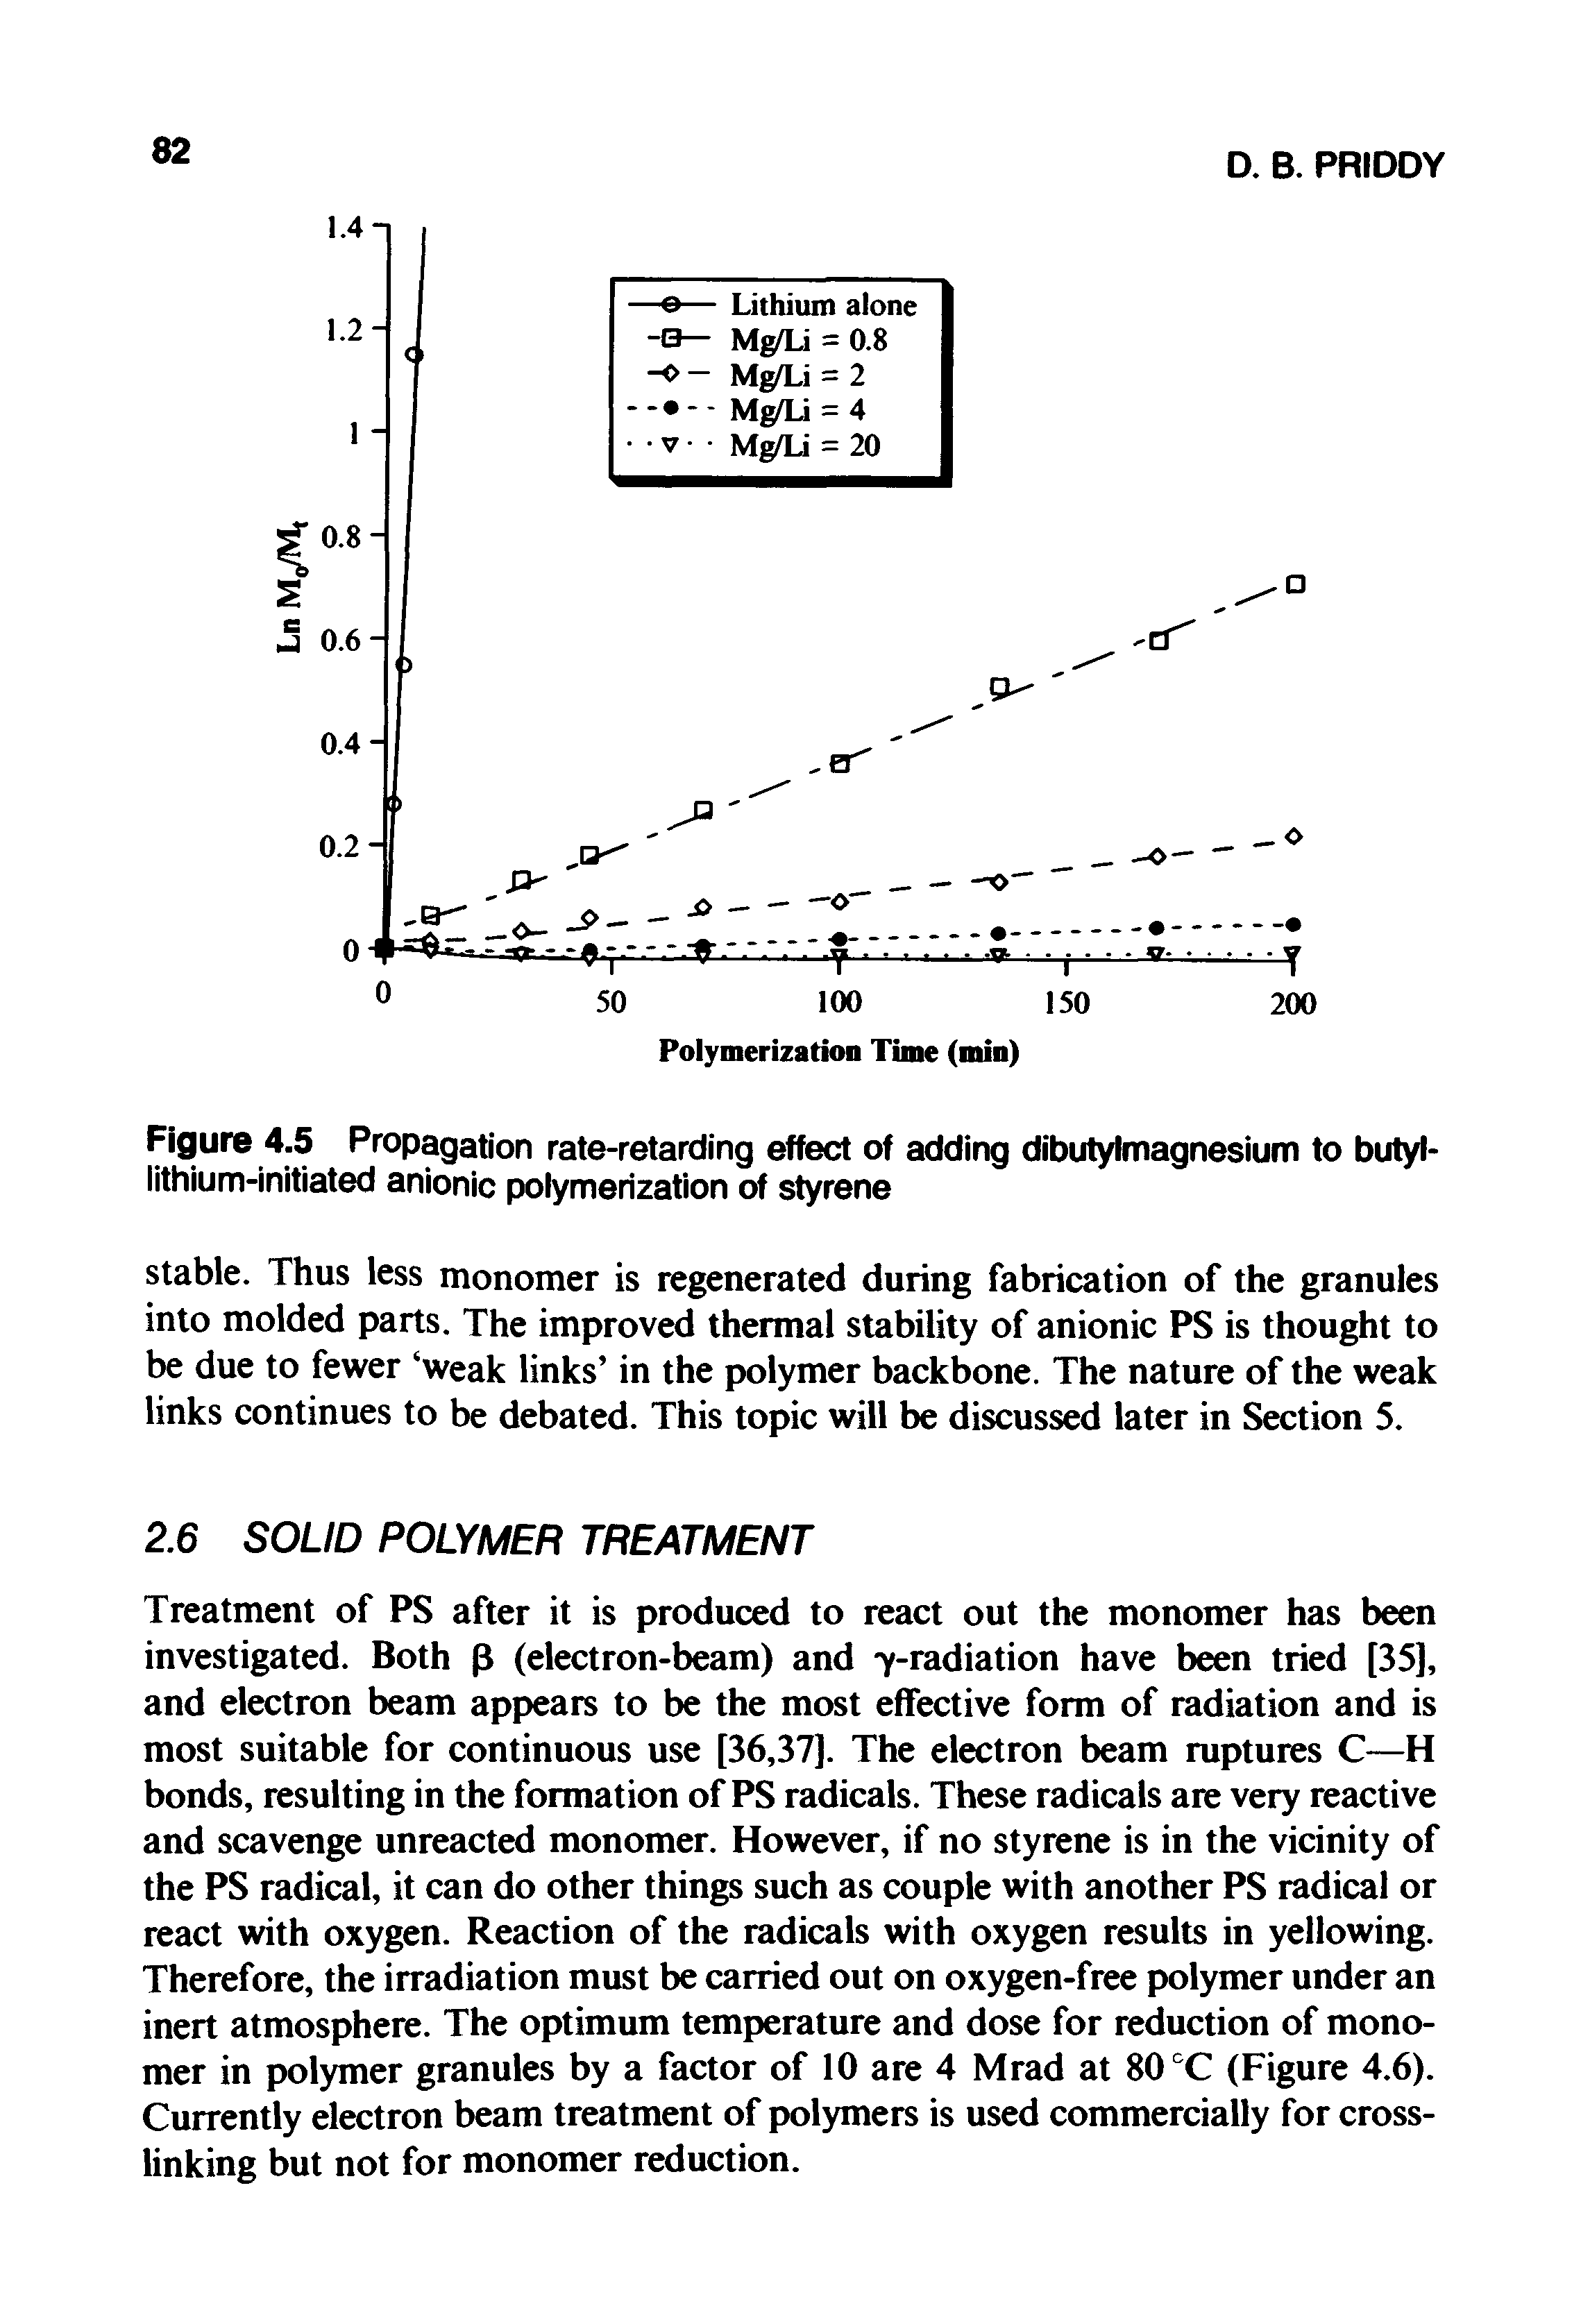 Figure 4.5 Propagation rate-retarding effect of adding dibutylmagnesium to butyl-lithium-initiated anionic polymerization of styrene...